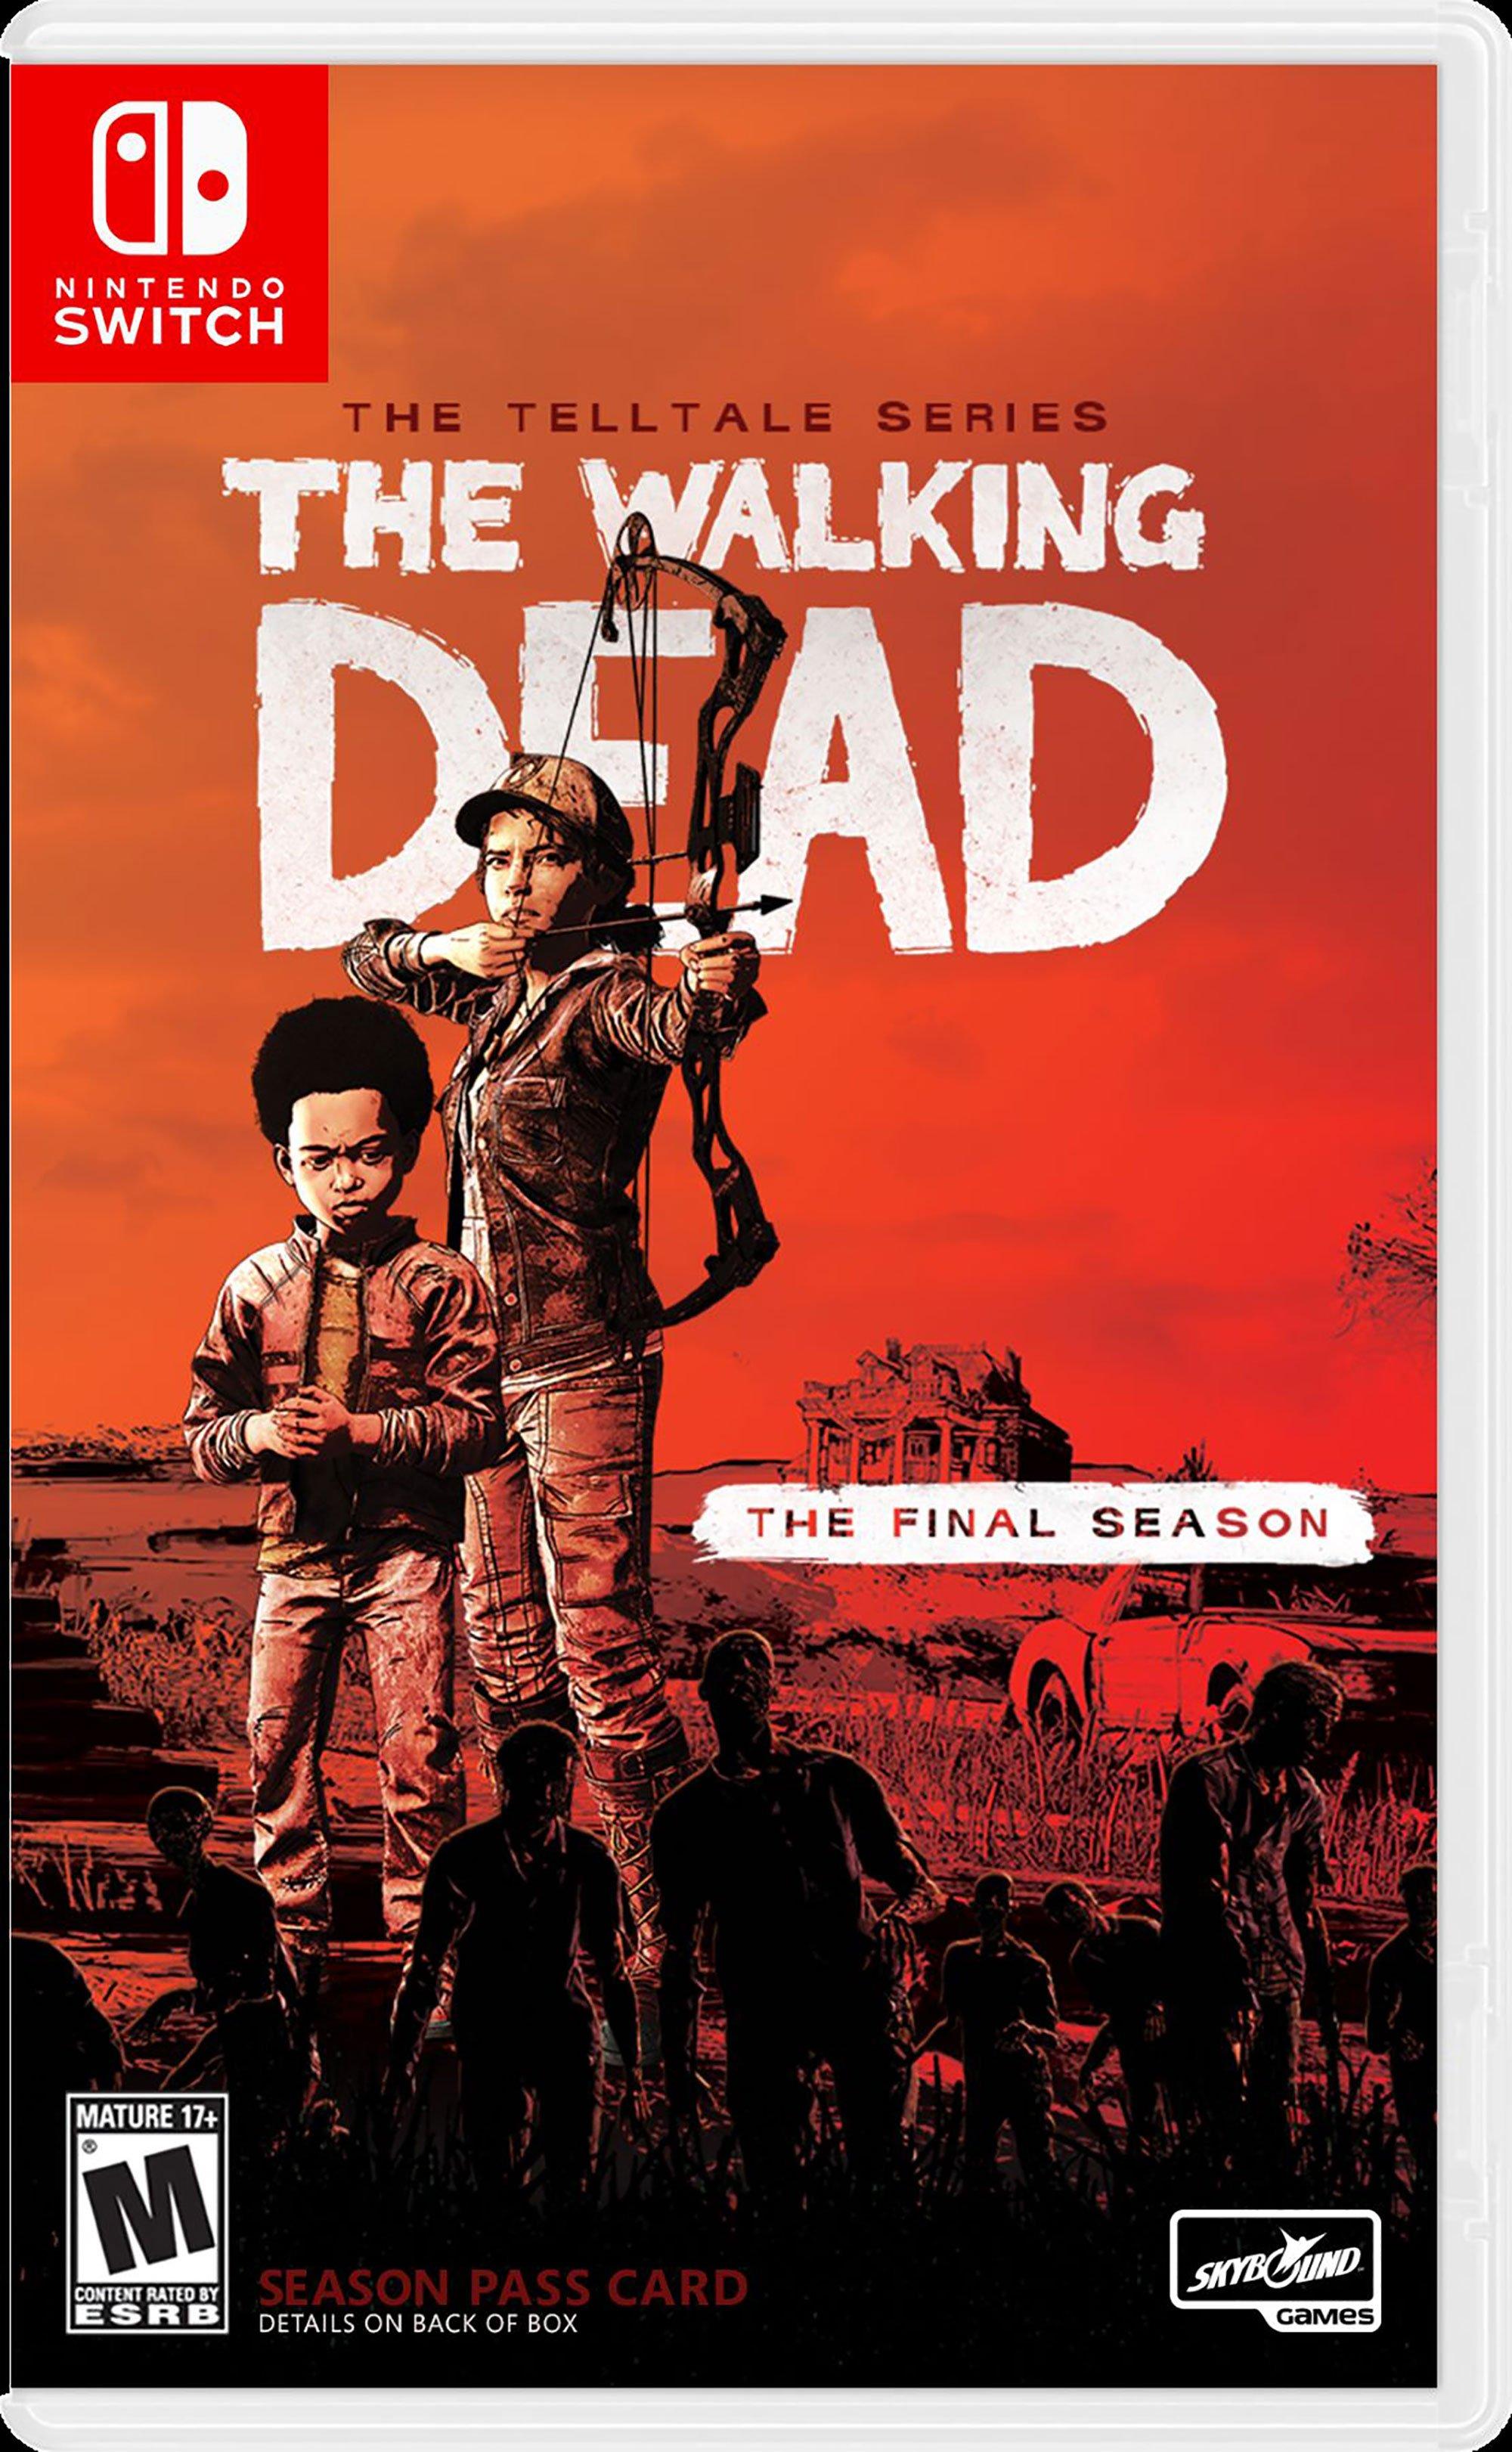 The Walking Dead The Final Season Skybound Games GameStop